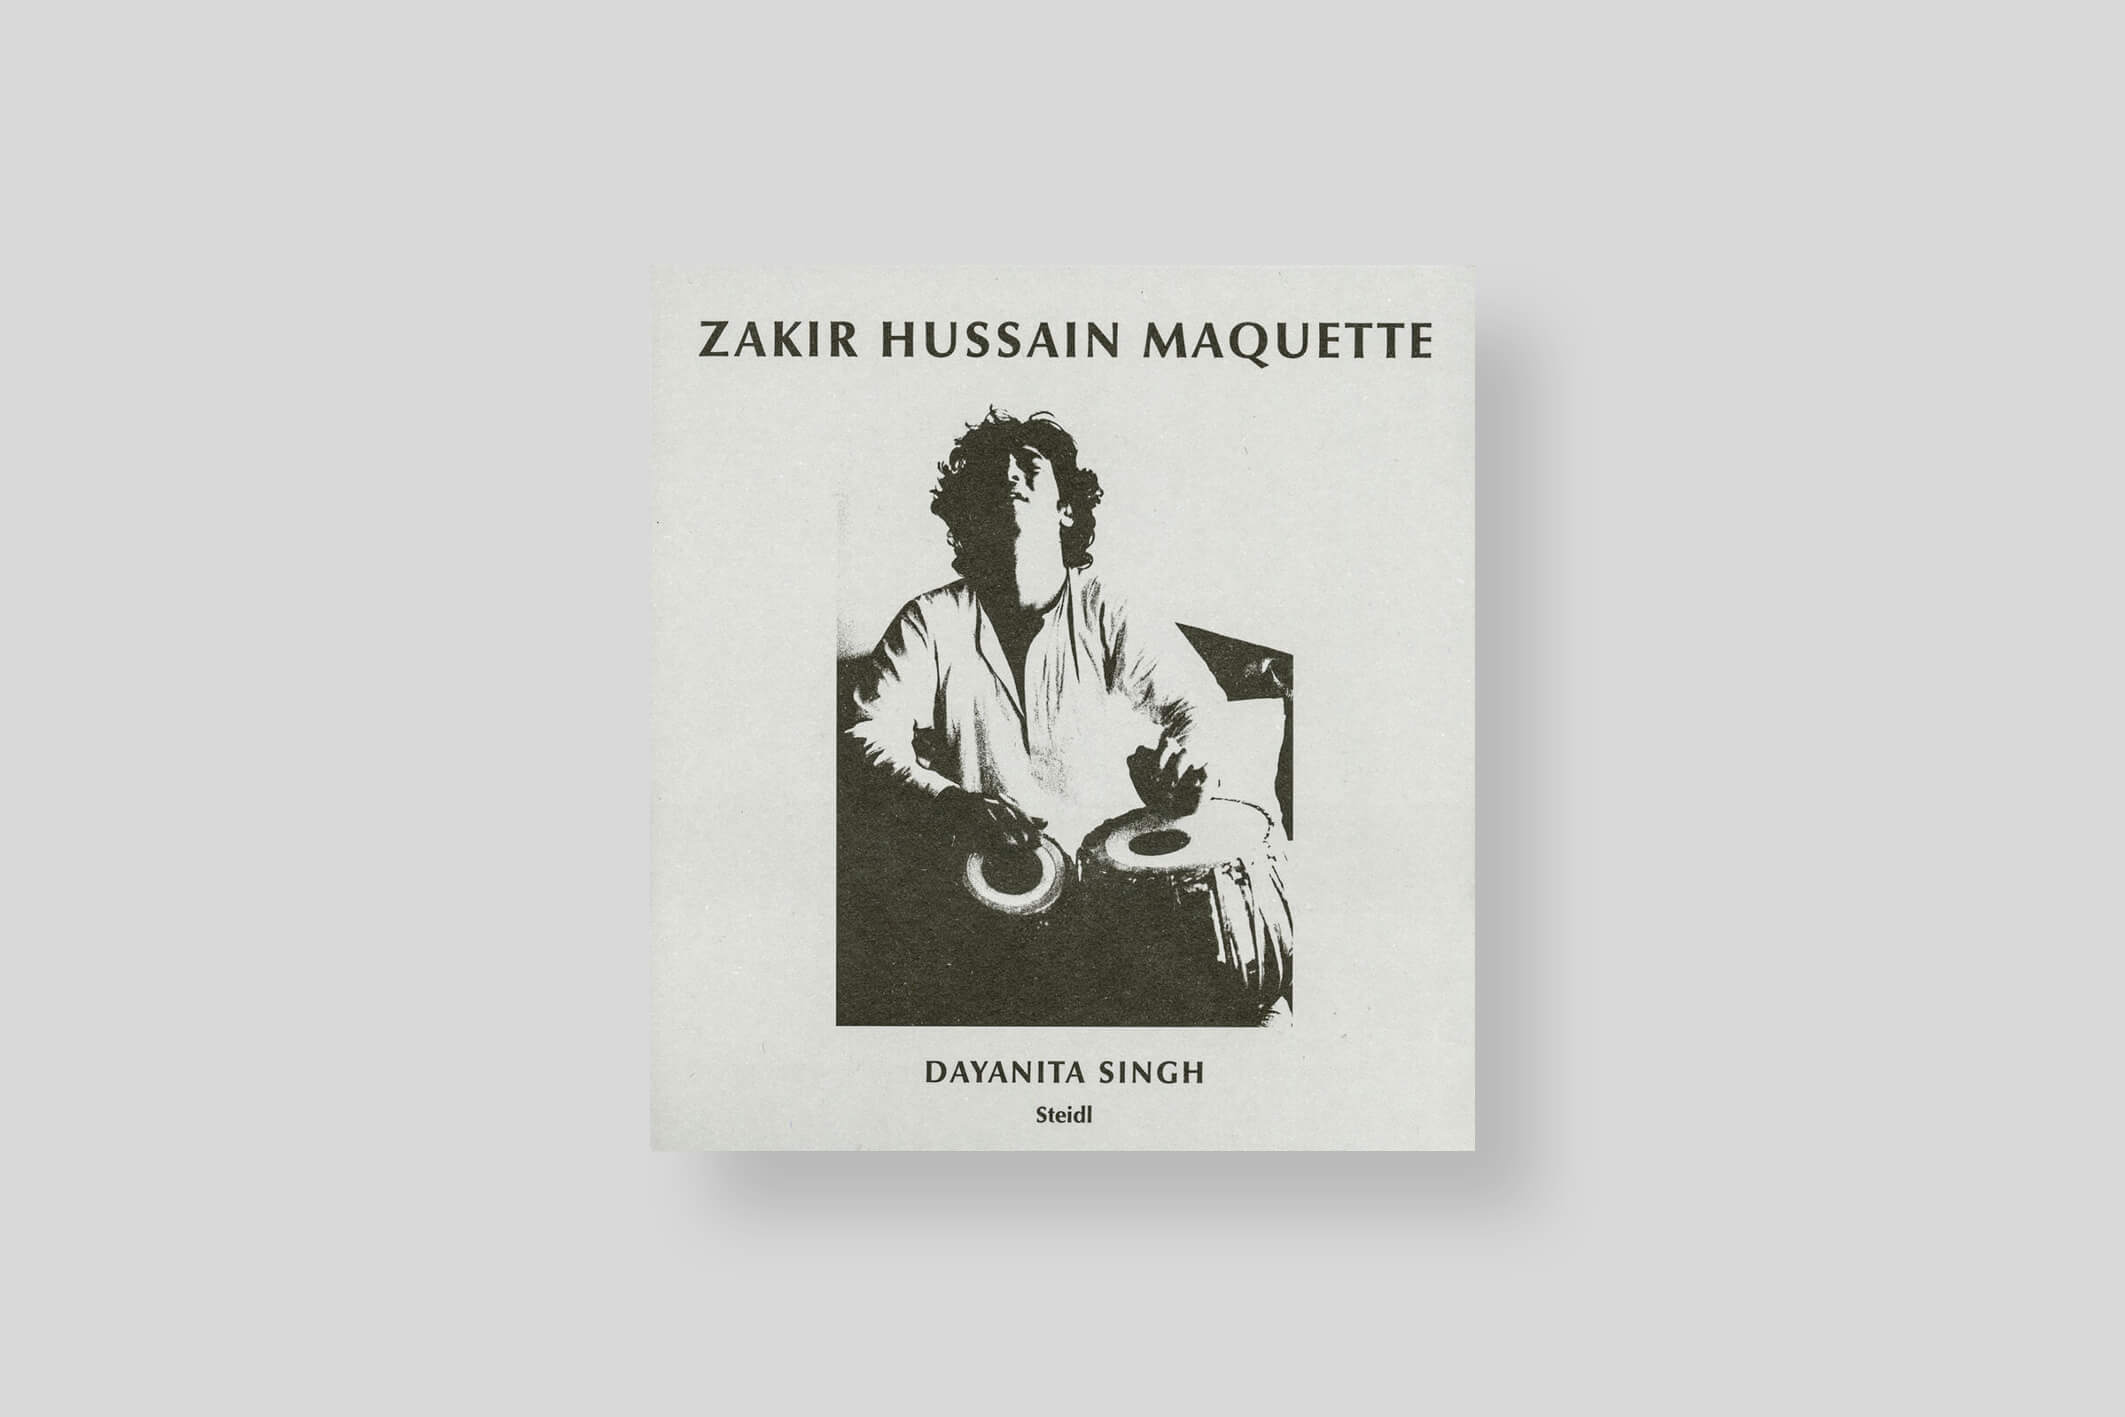 Zakir-Hussain-Maquette_Dayanita-Singh_Steidl-Verlag_cover